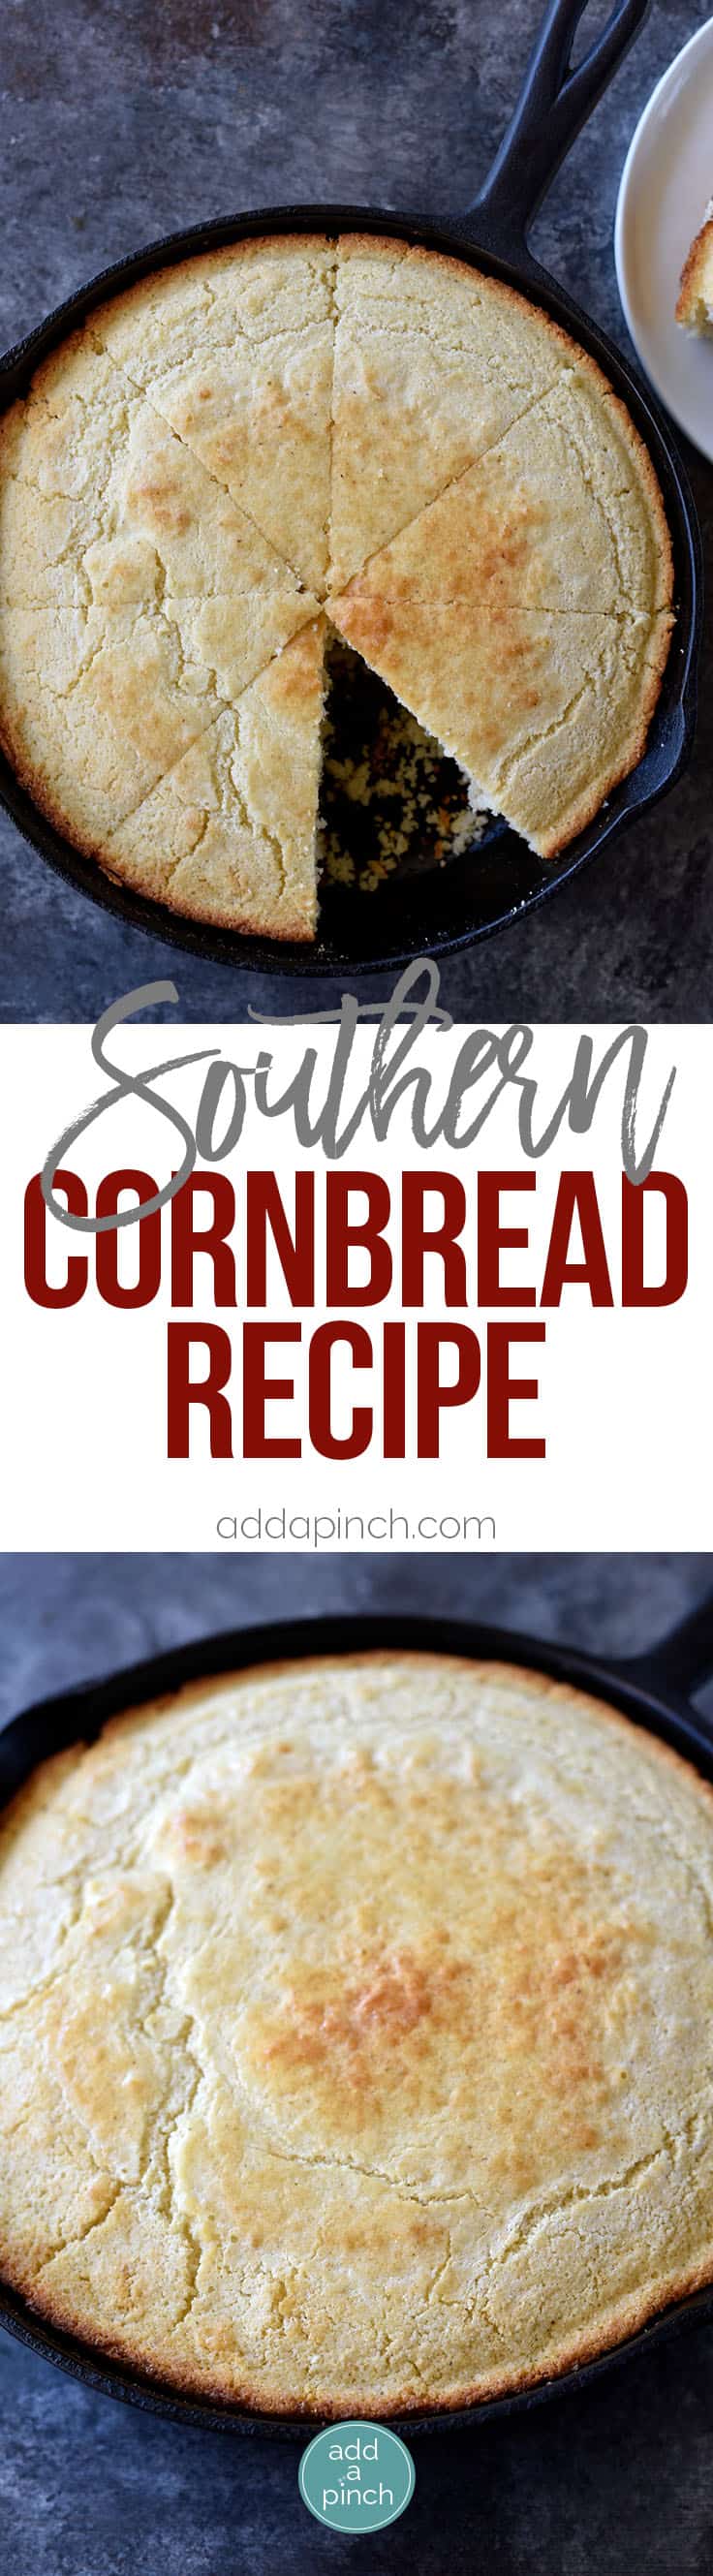 Southern Cornbread Recipe - Cornbread makes a classic Southern side dish. Southern cornbread is made with cornmeal, flour, buttermilk, eggs and ready in 30 minutes! // addapinch.com